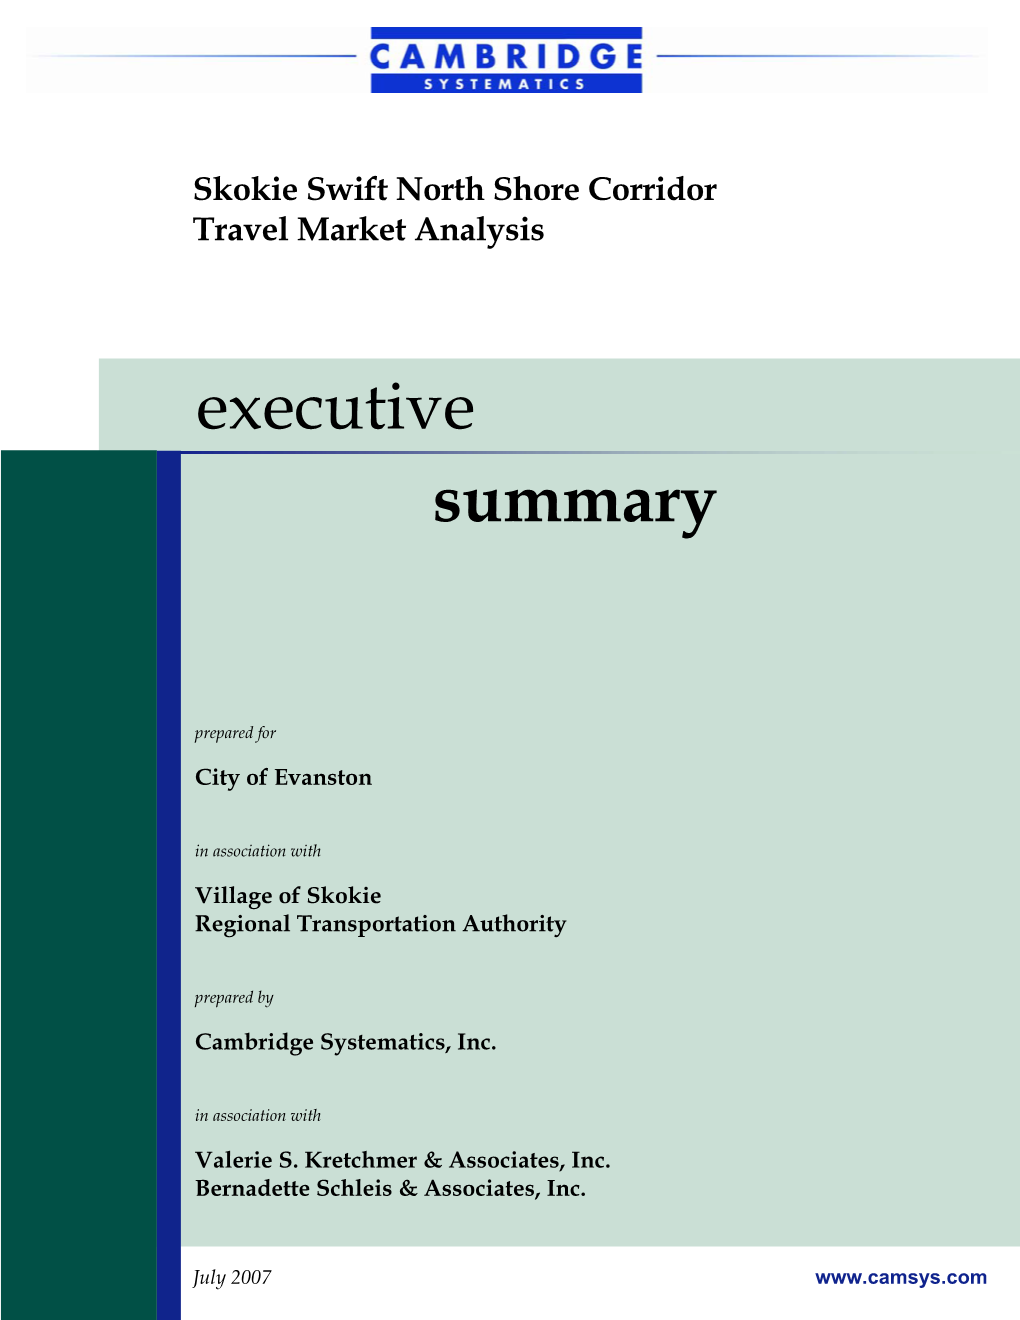 Skokie Swift Corridor Travel Market Analysis (Executive Summary)